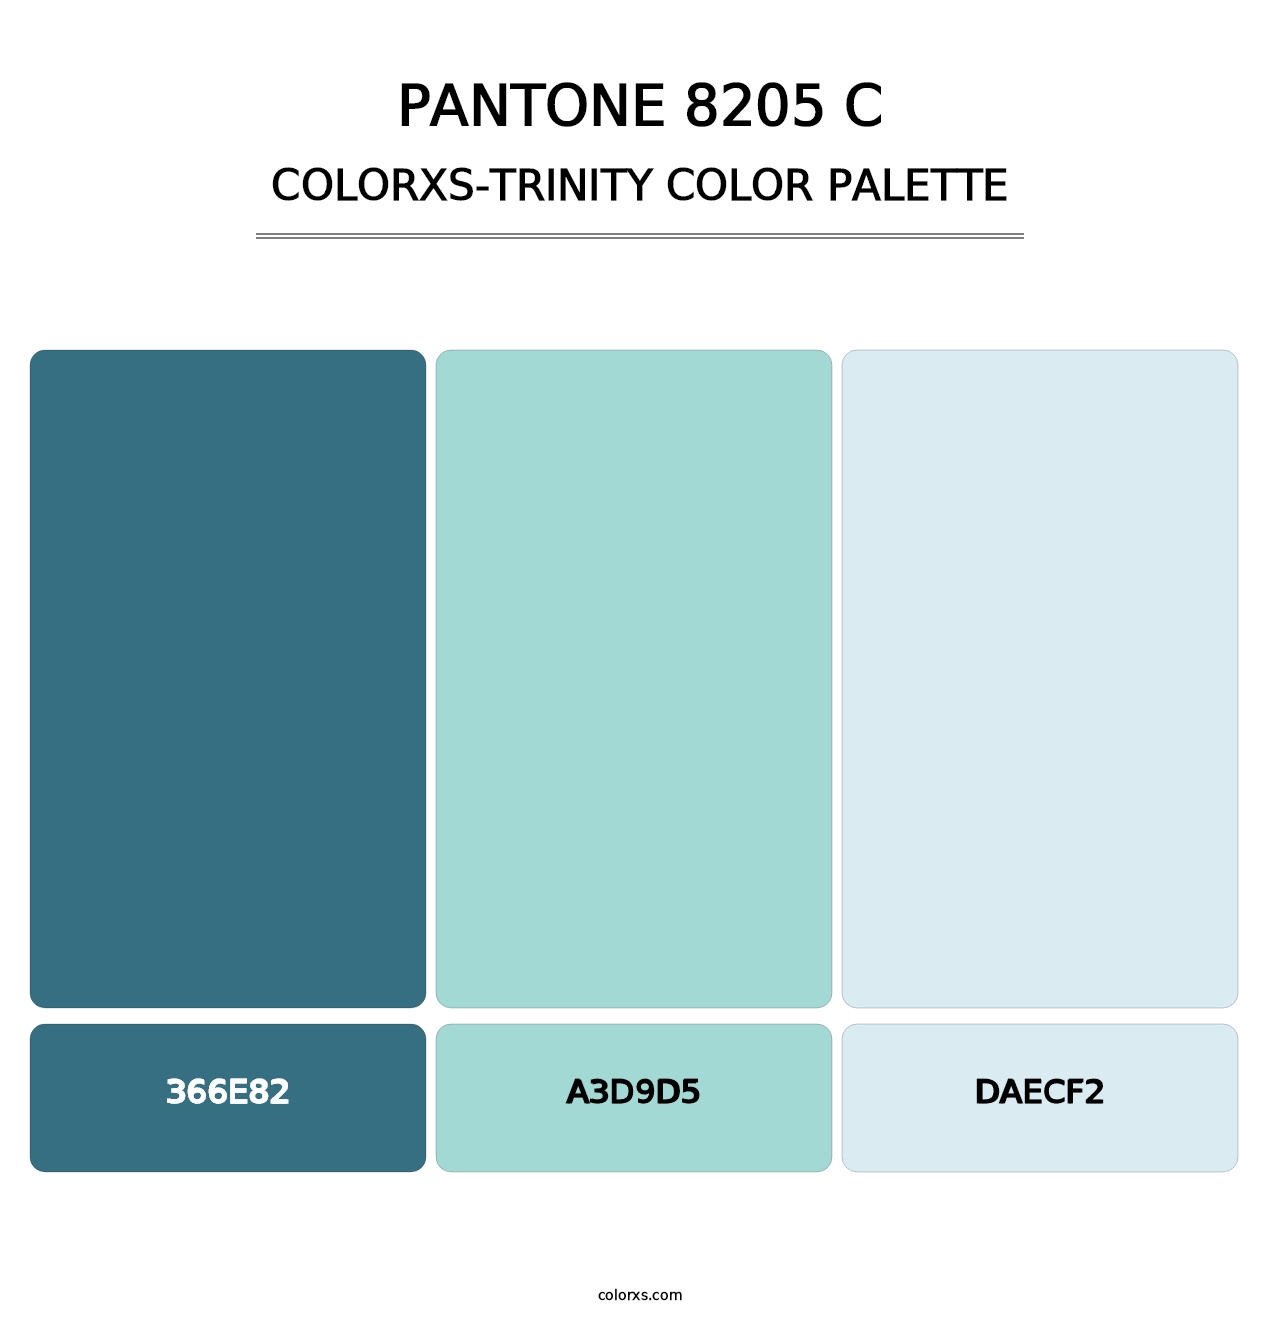 PANTONE 8205 C - Colorxs Trinity Palette